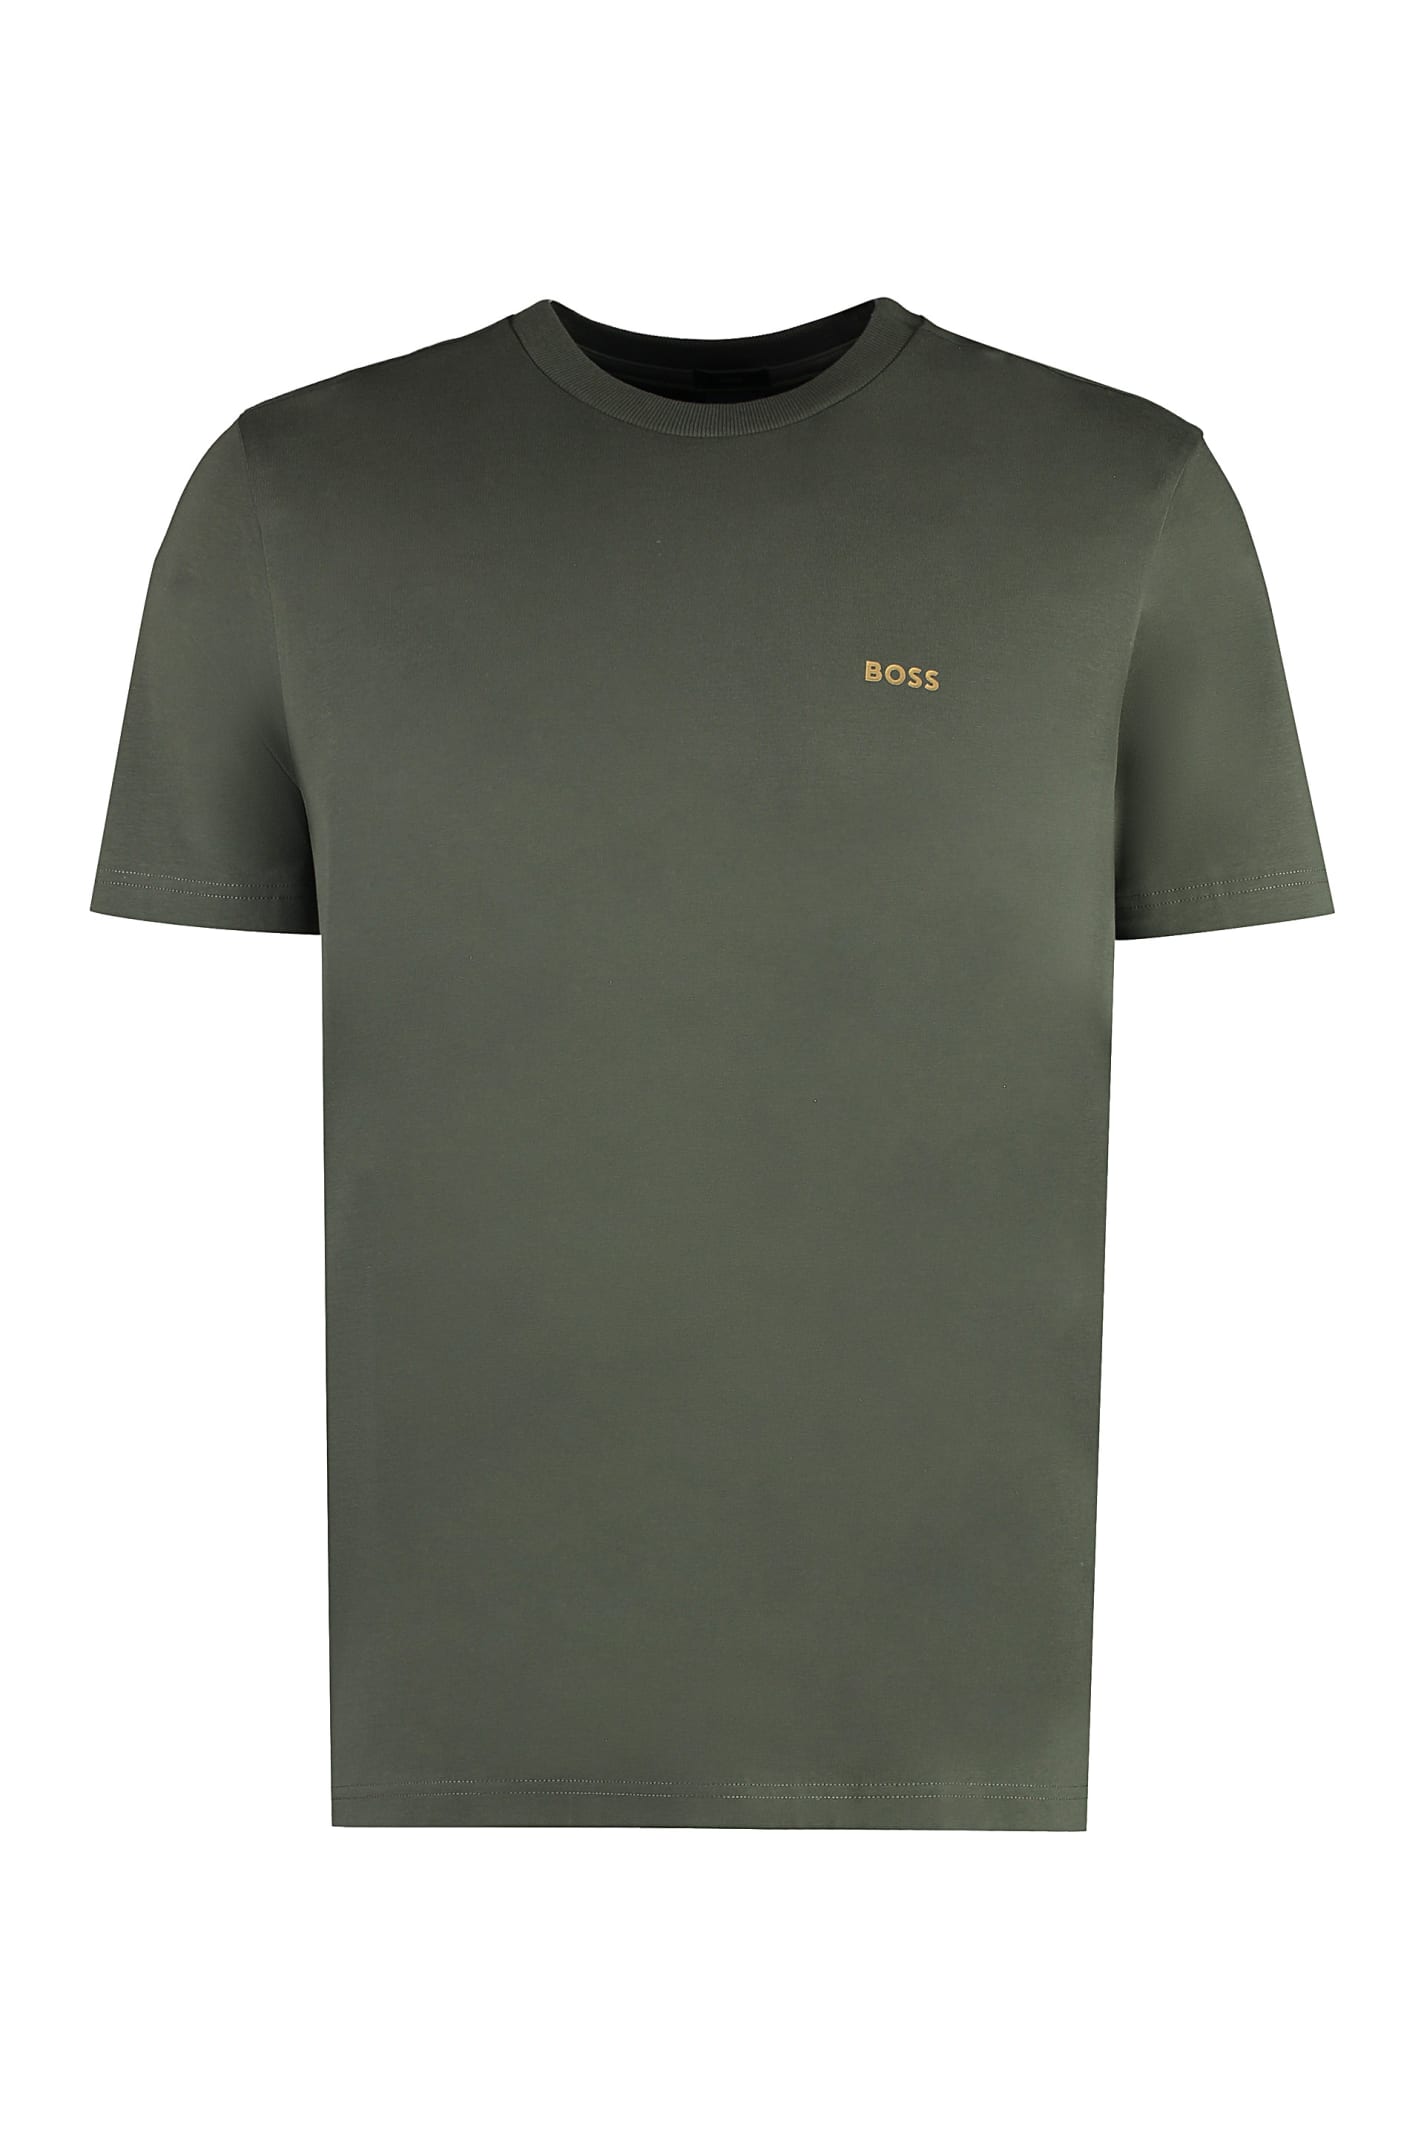 Hugo Boss Cotton Crew-neck T-shirt In Green